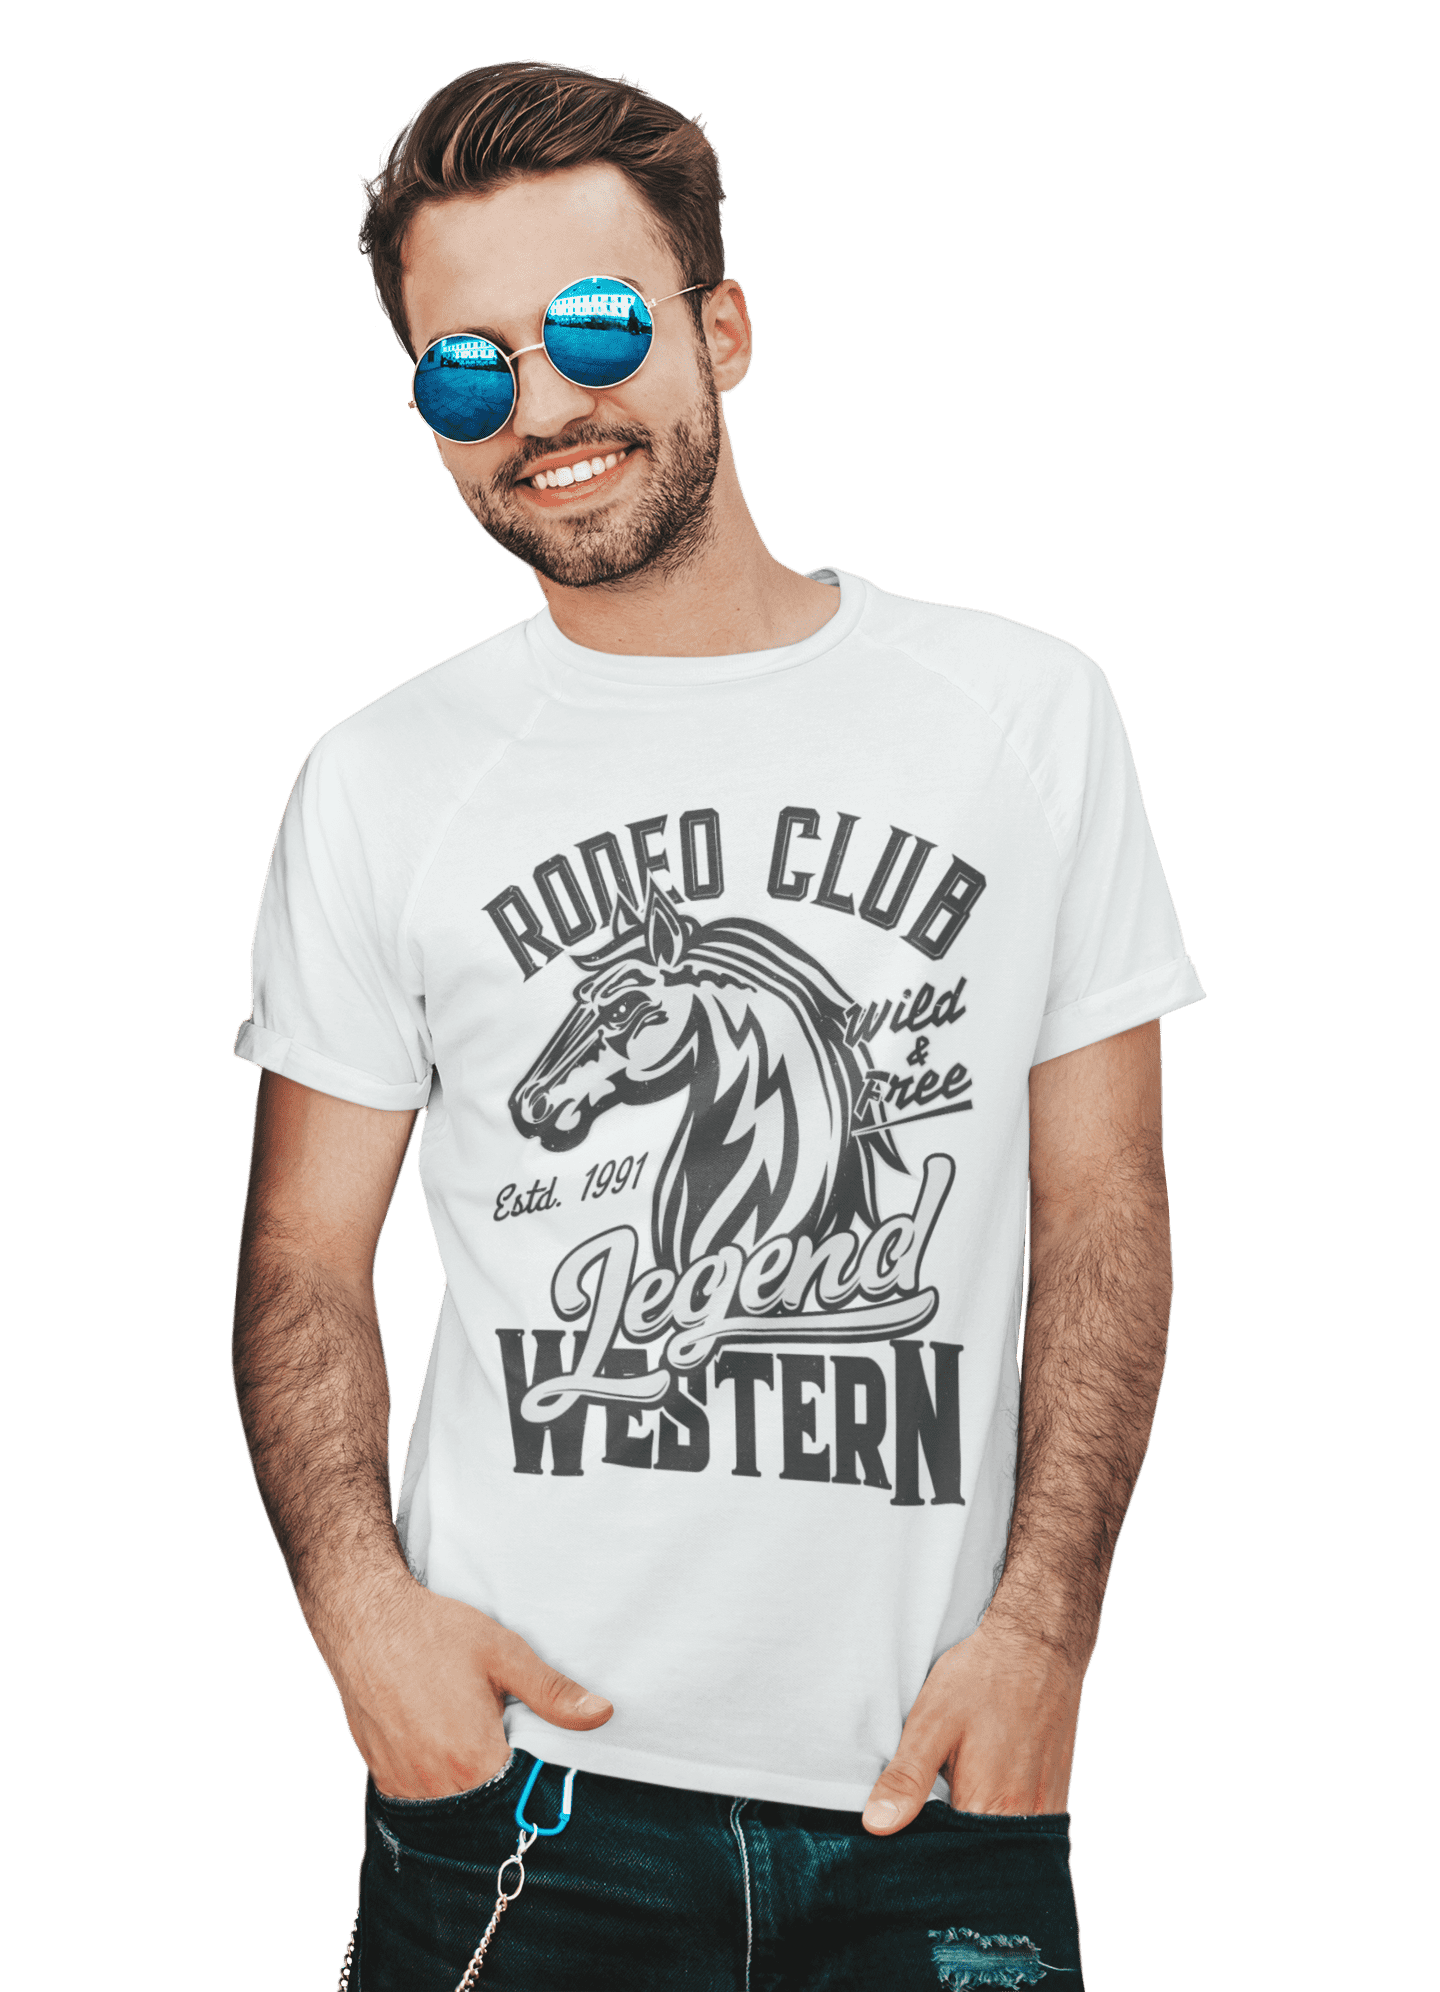 kaos rodeo club legend western